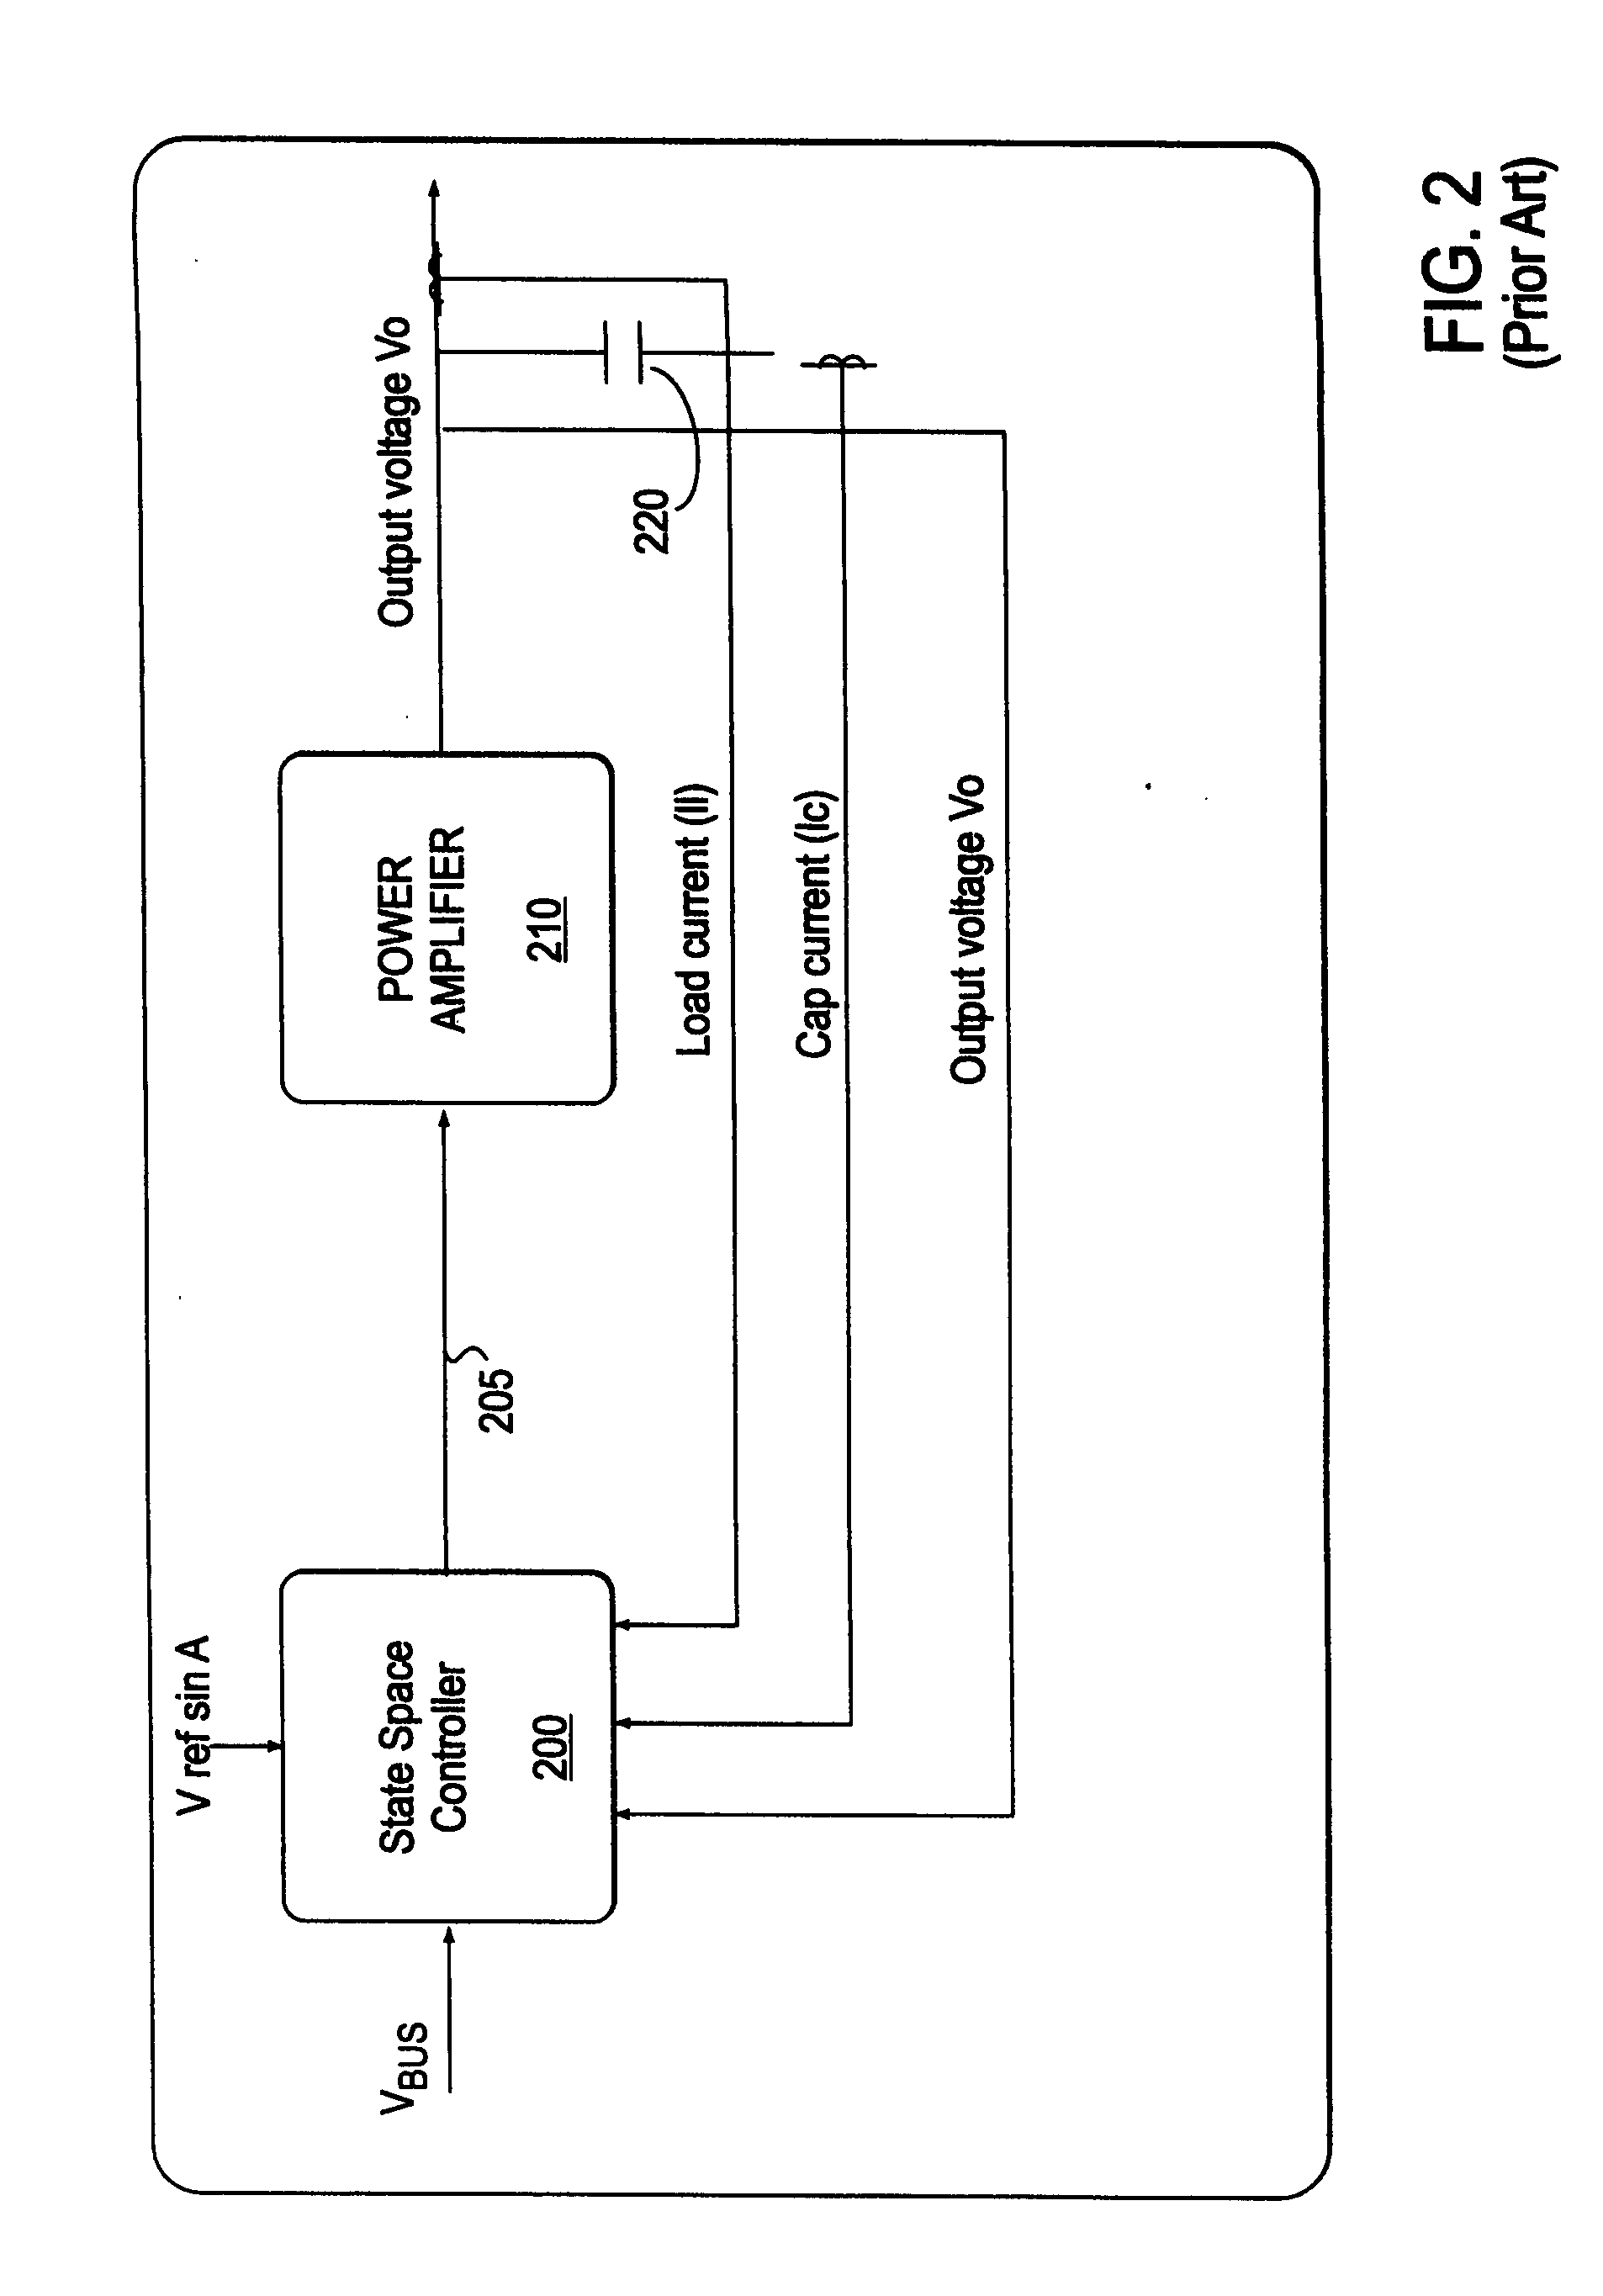 Harmonics attenuator using combination feedback controller